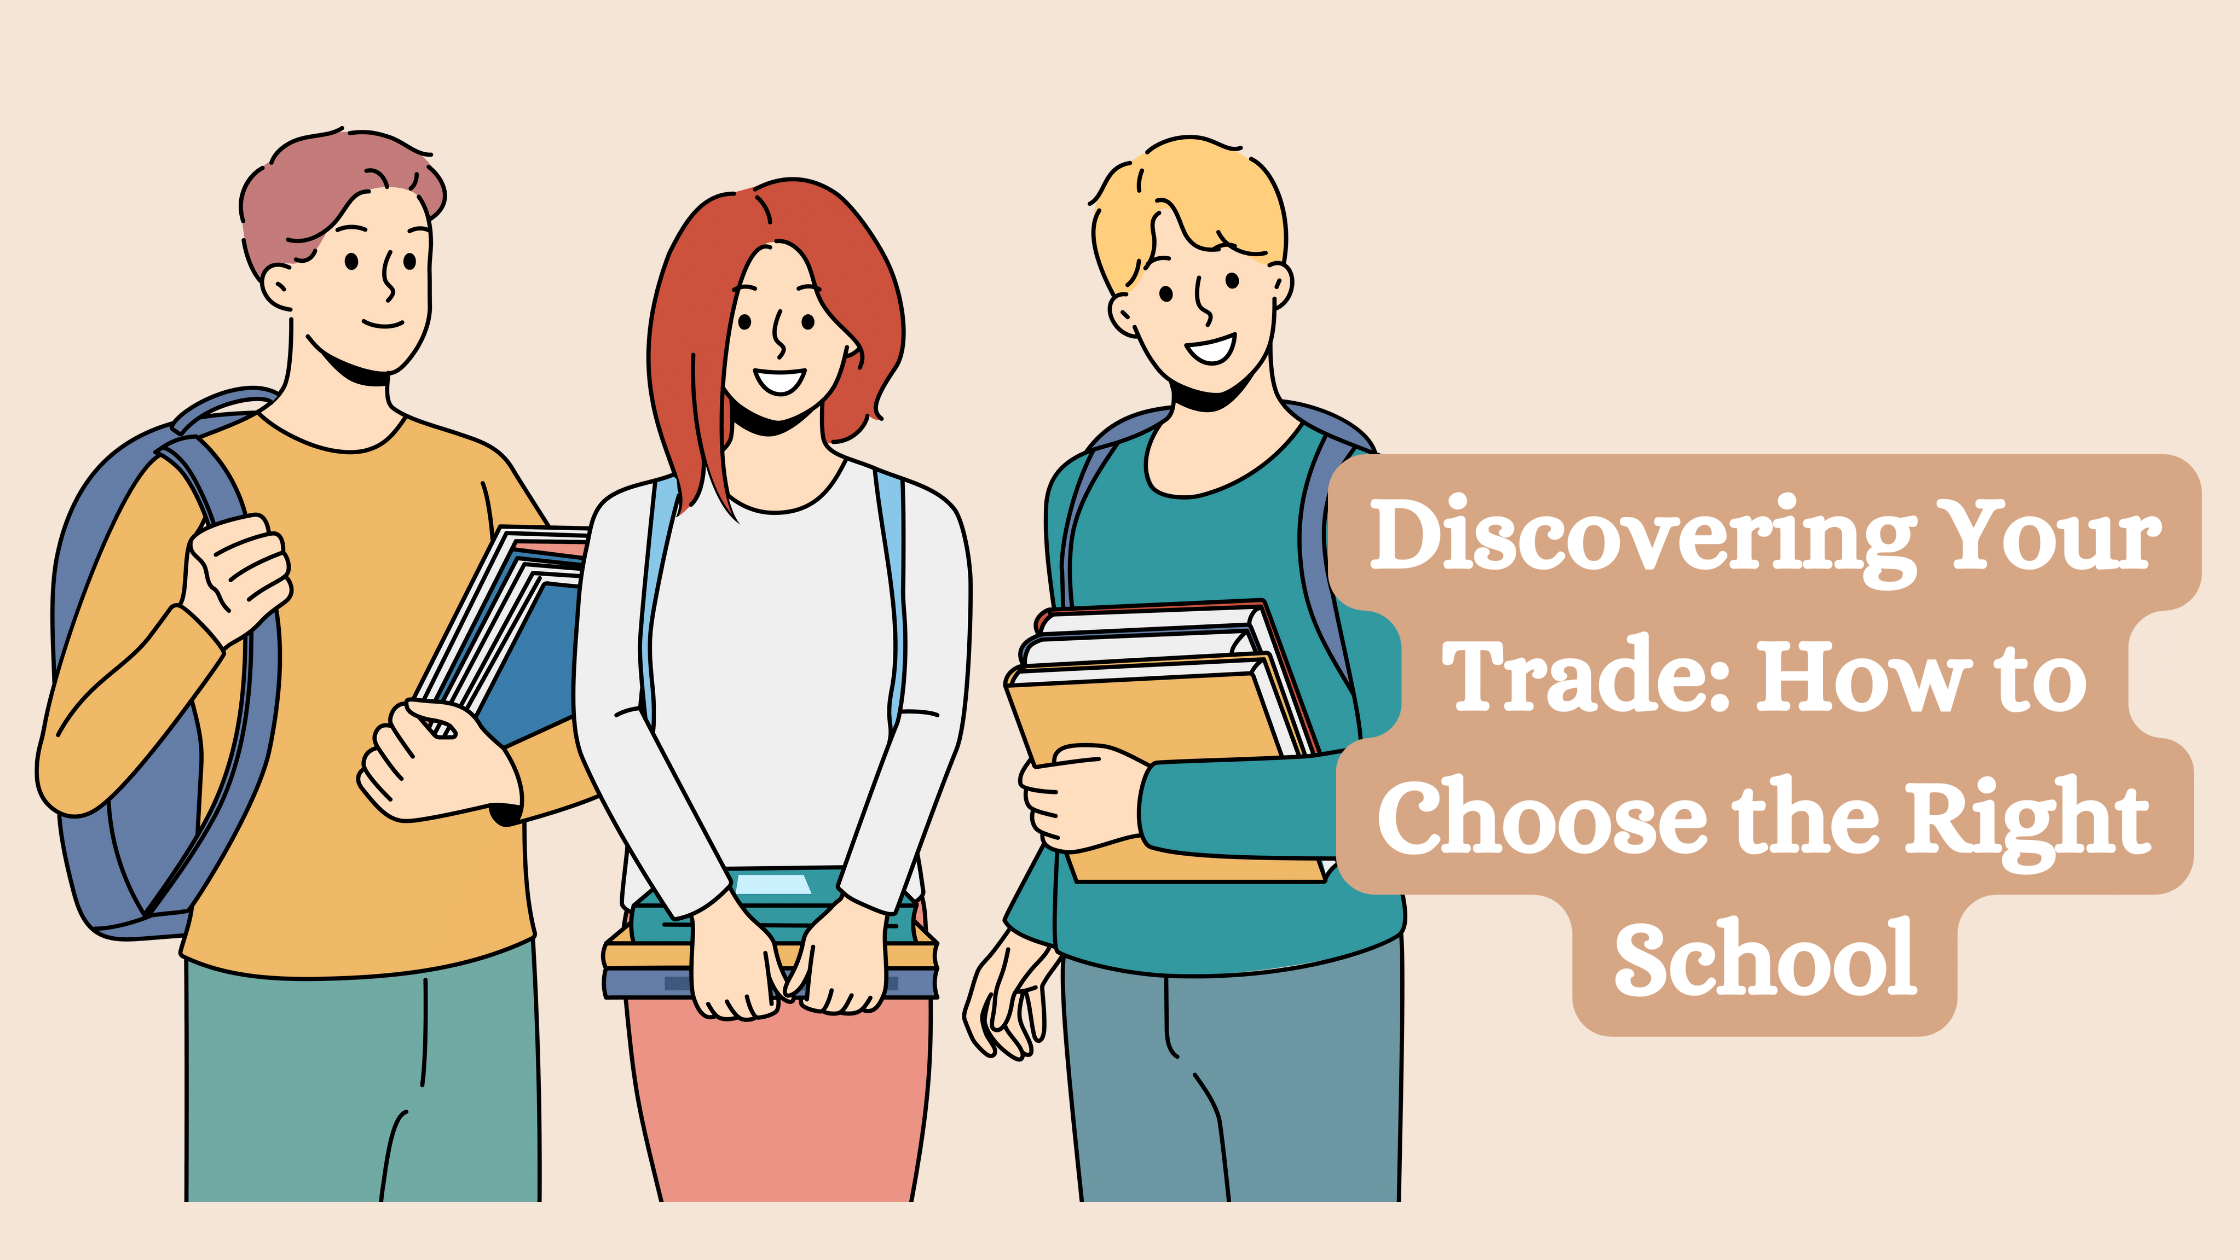 Choose the Right School